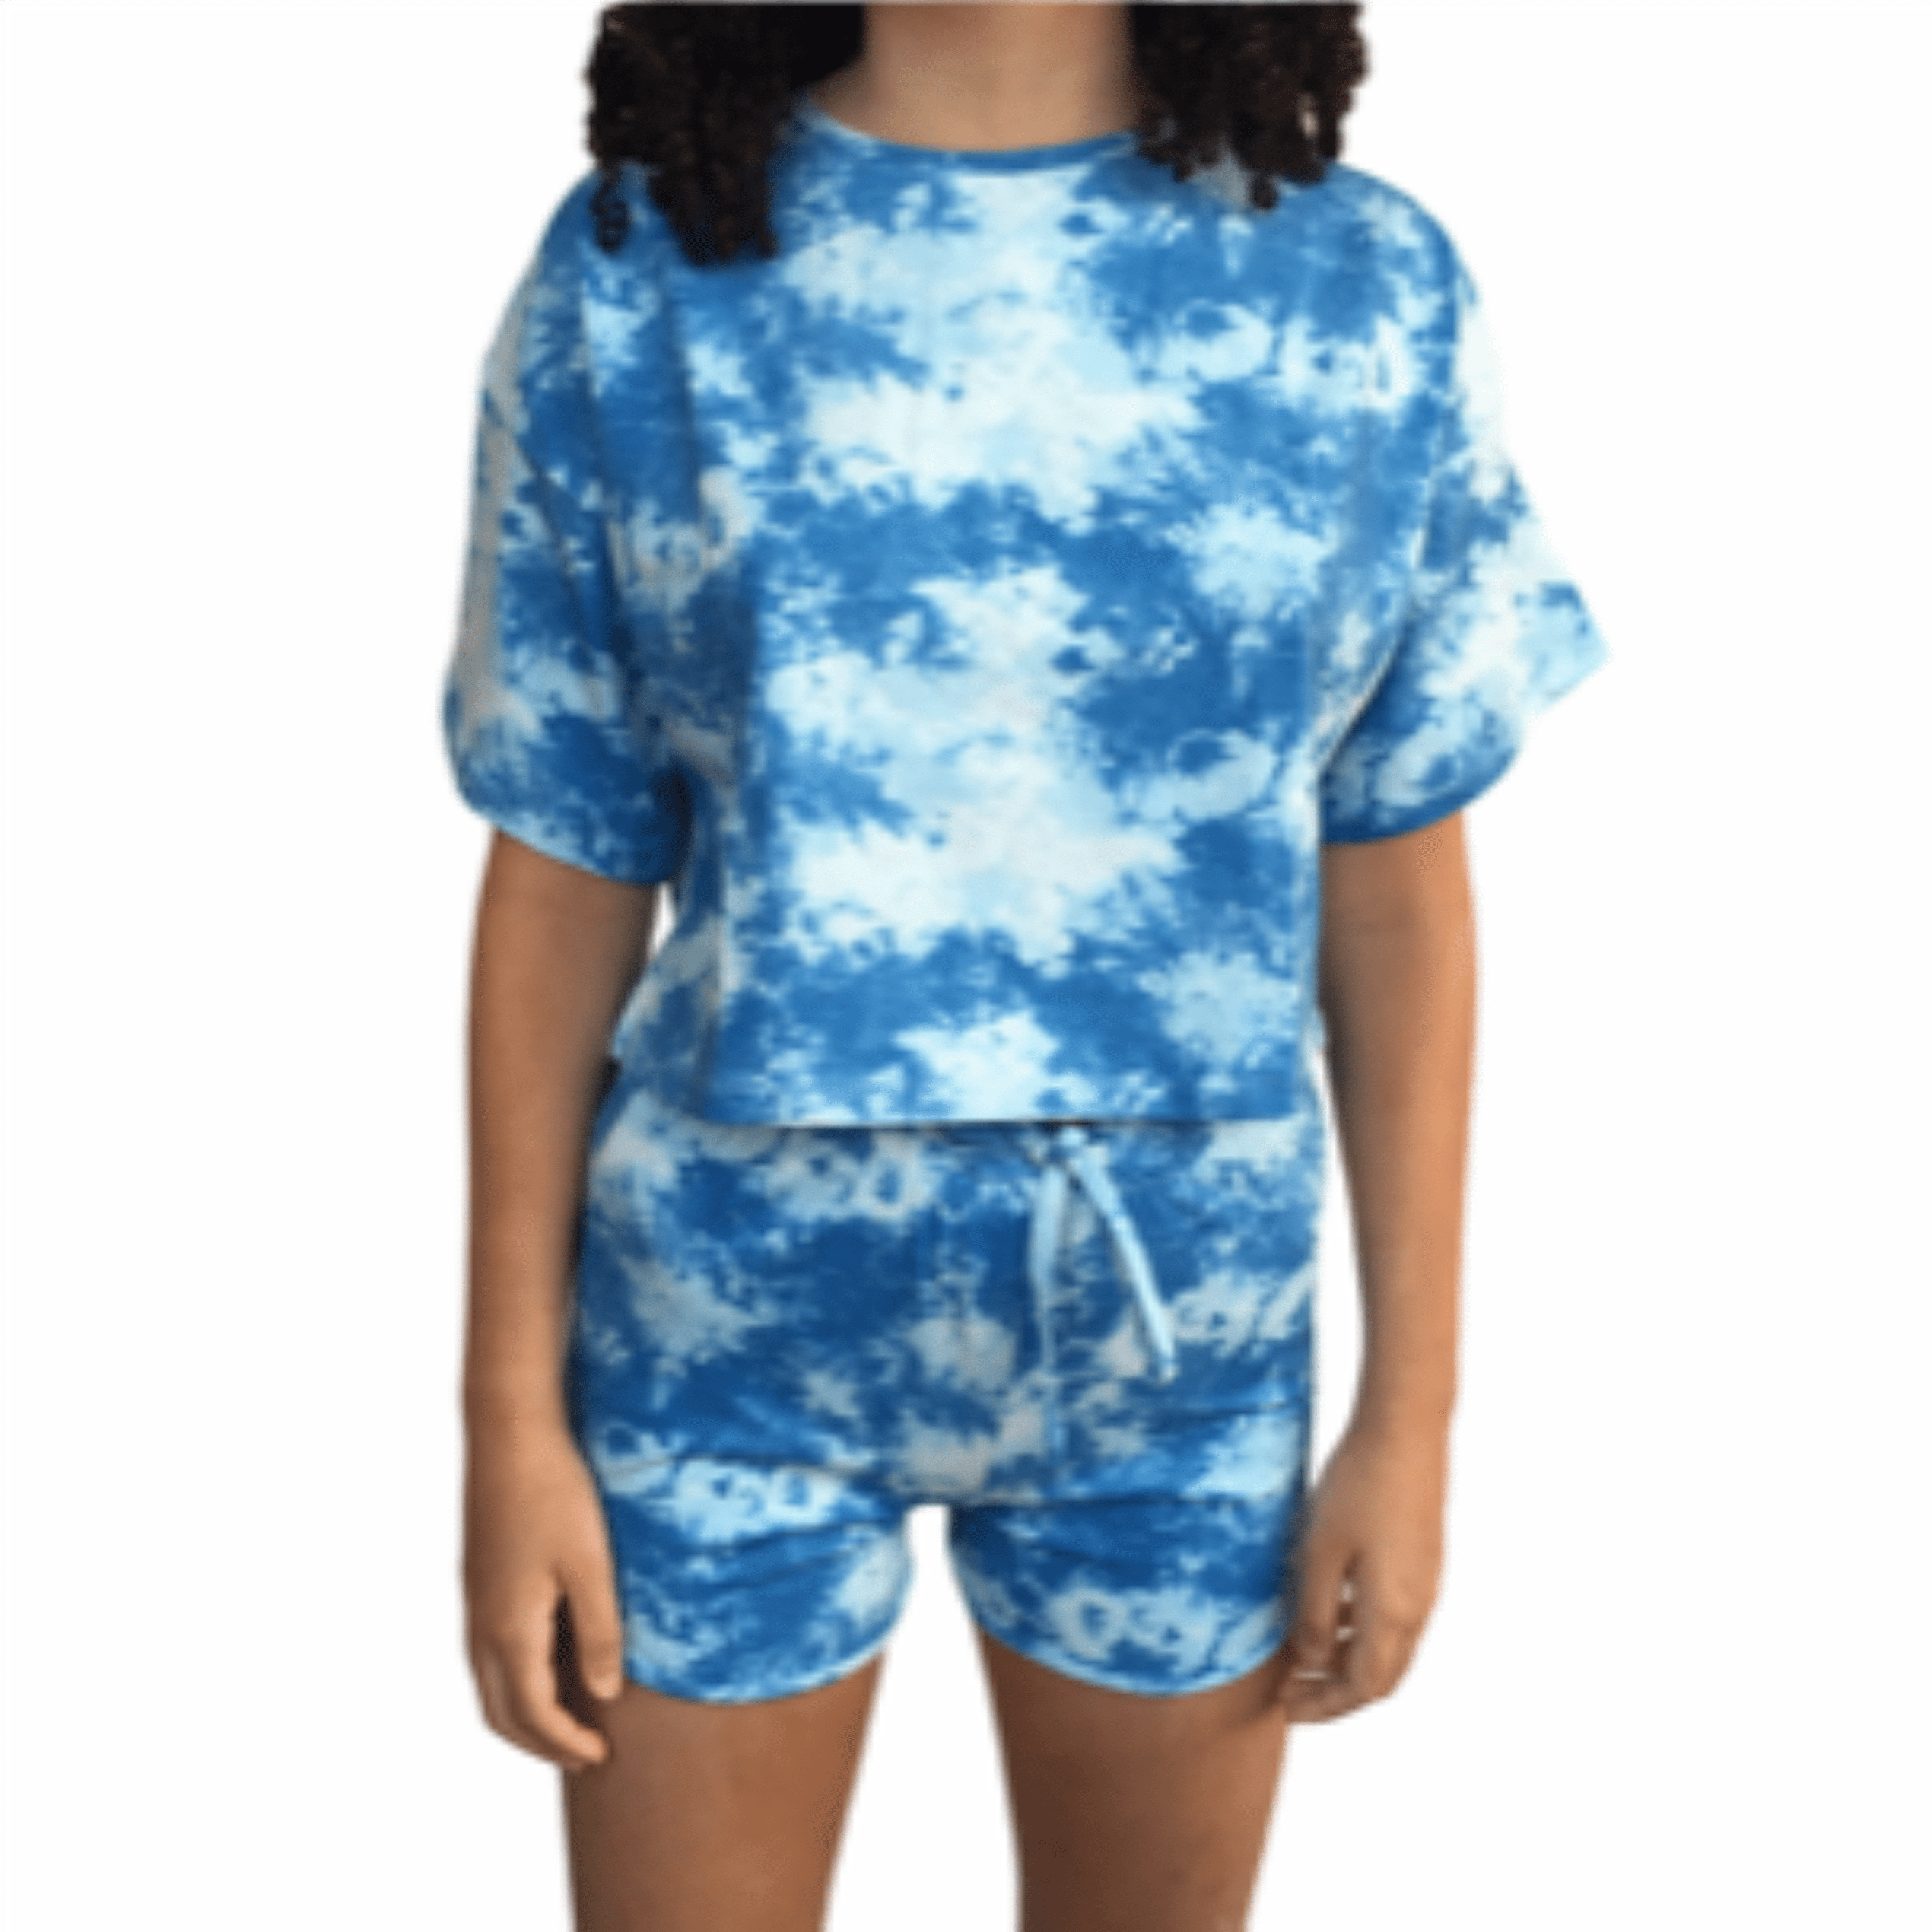 ElOutlet Girls Pyjamas Blue Short Sleeve Tie-Dye Girls Pyjama